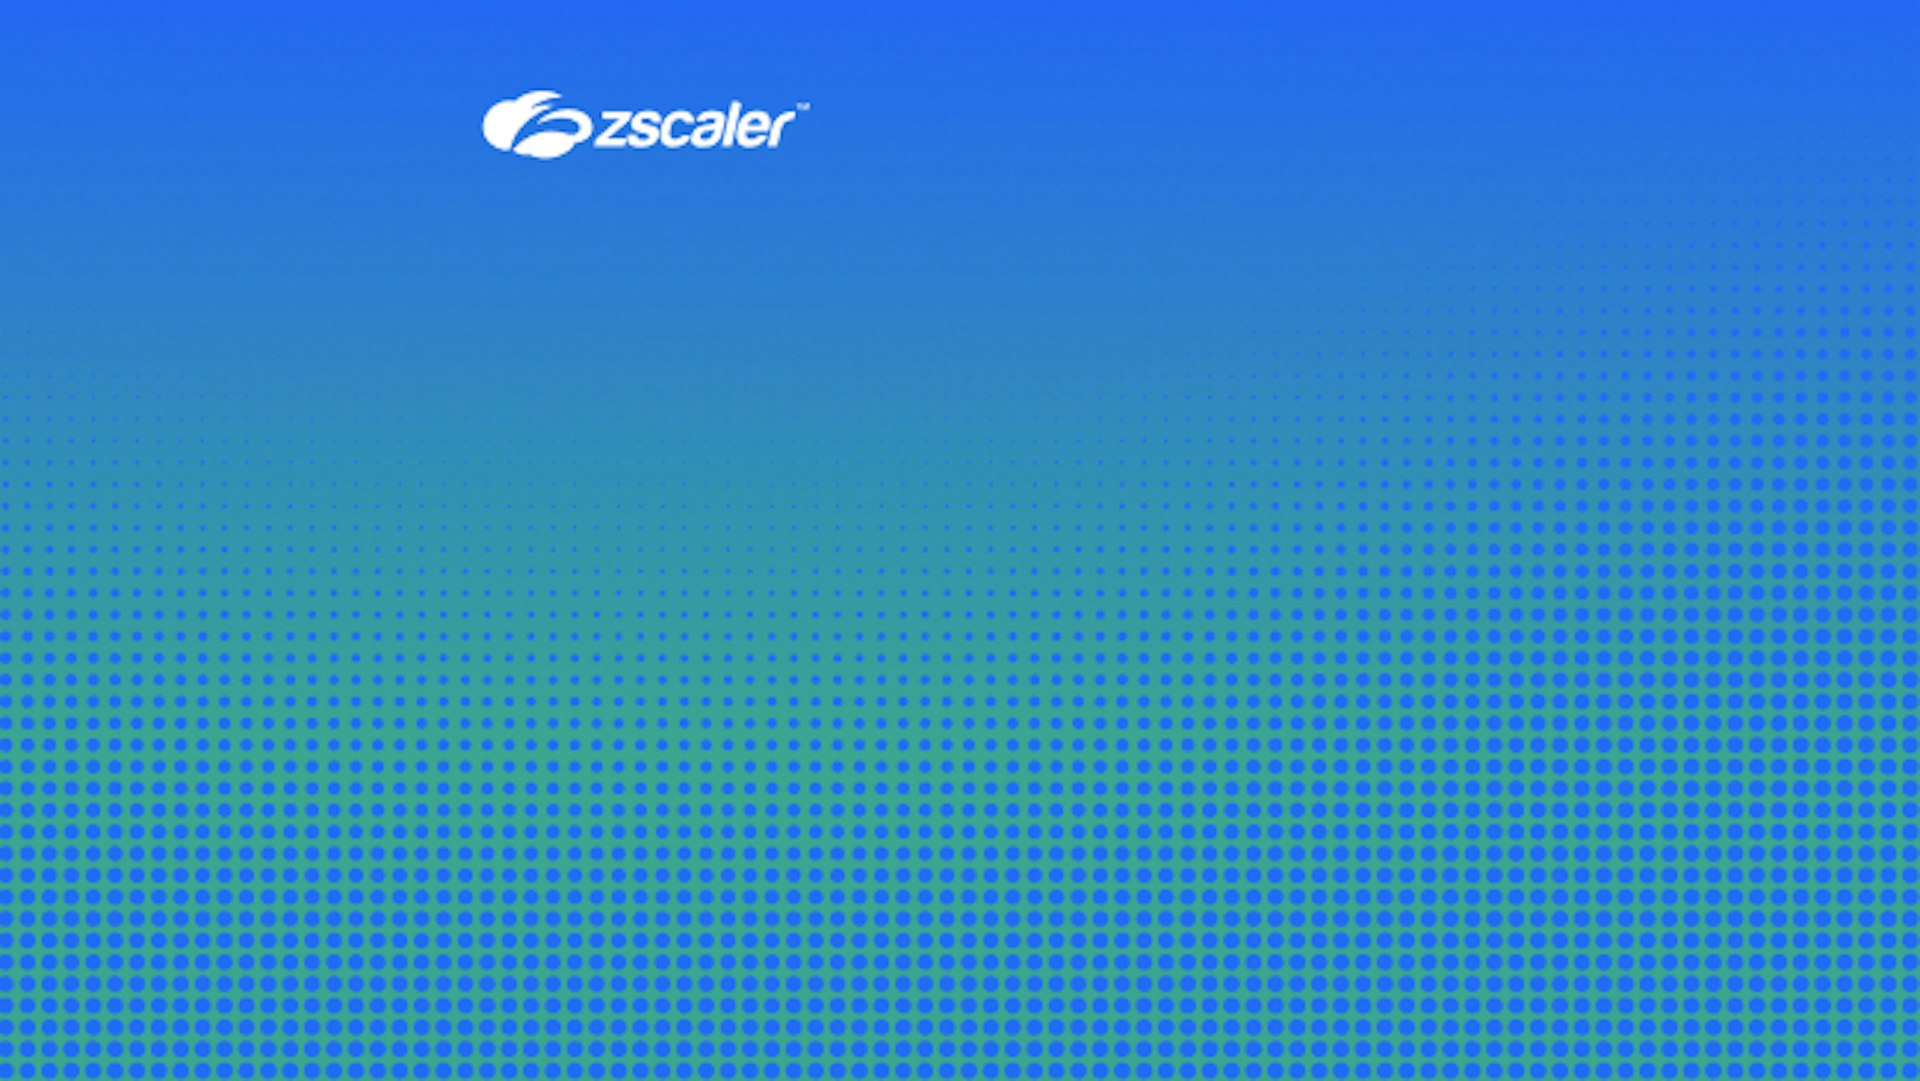 Zscaler Client Connector | Segurança móvel baseada na nuvem